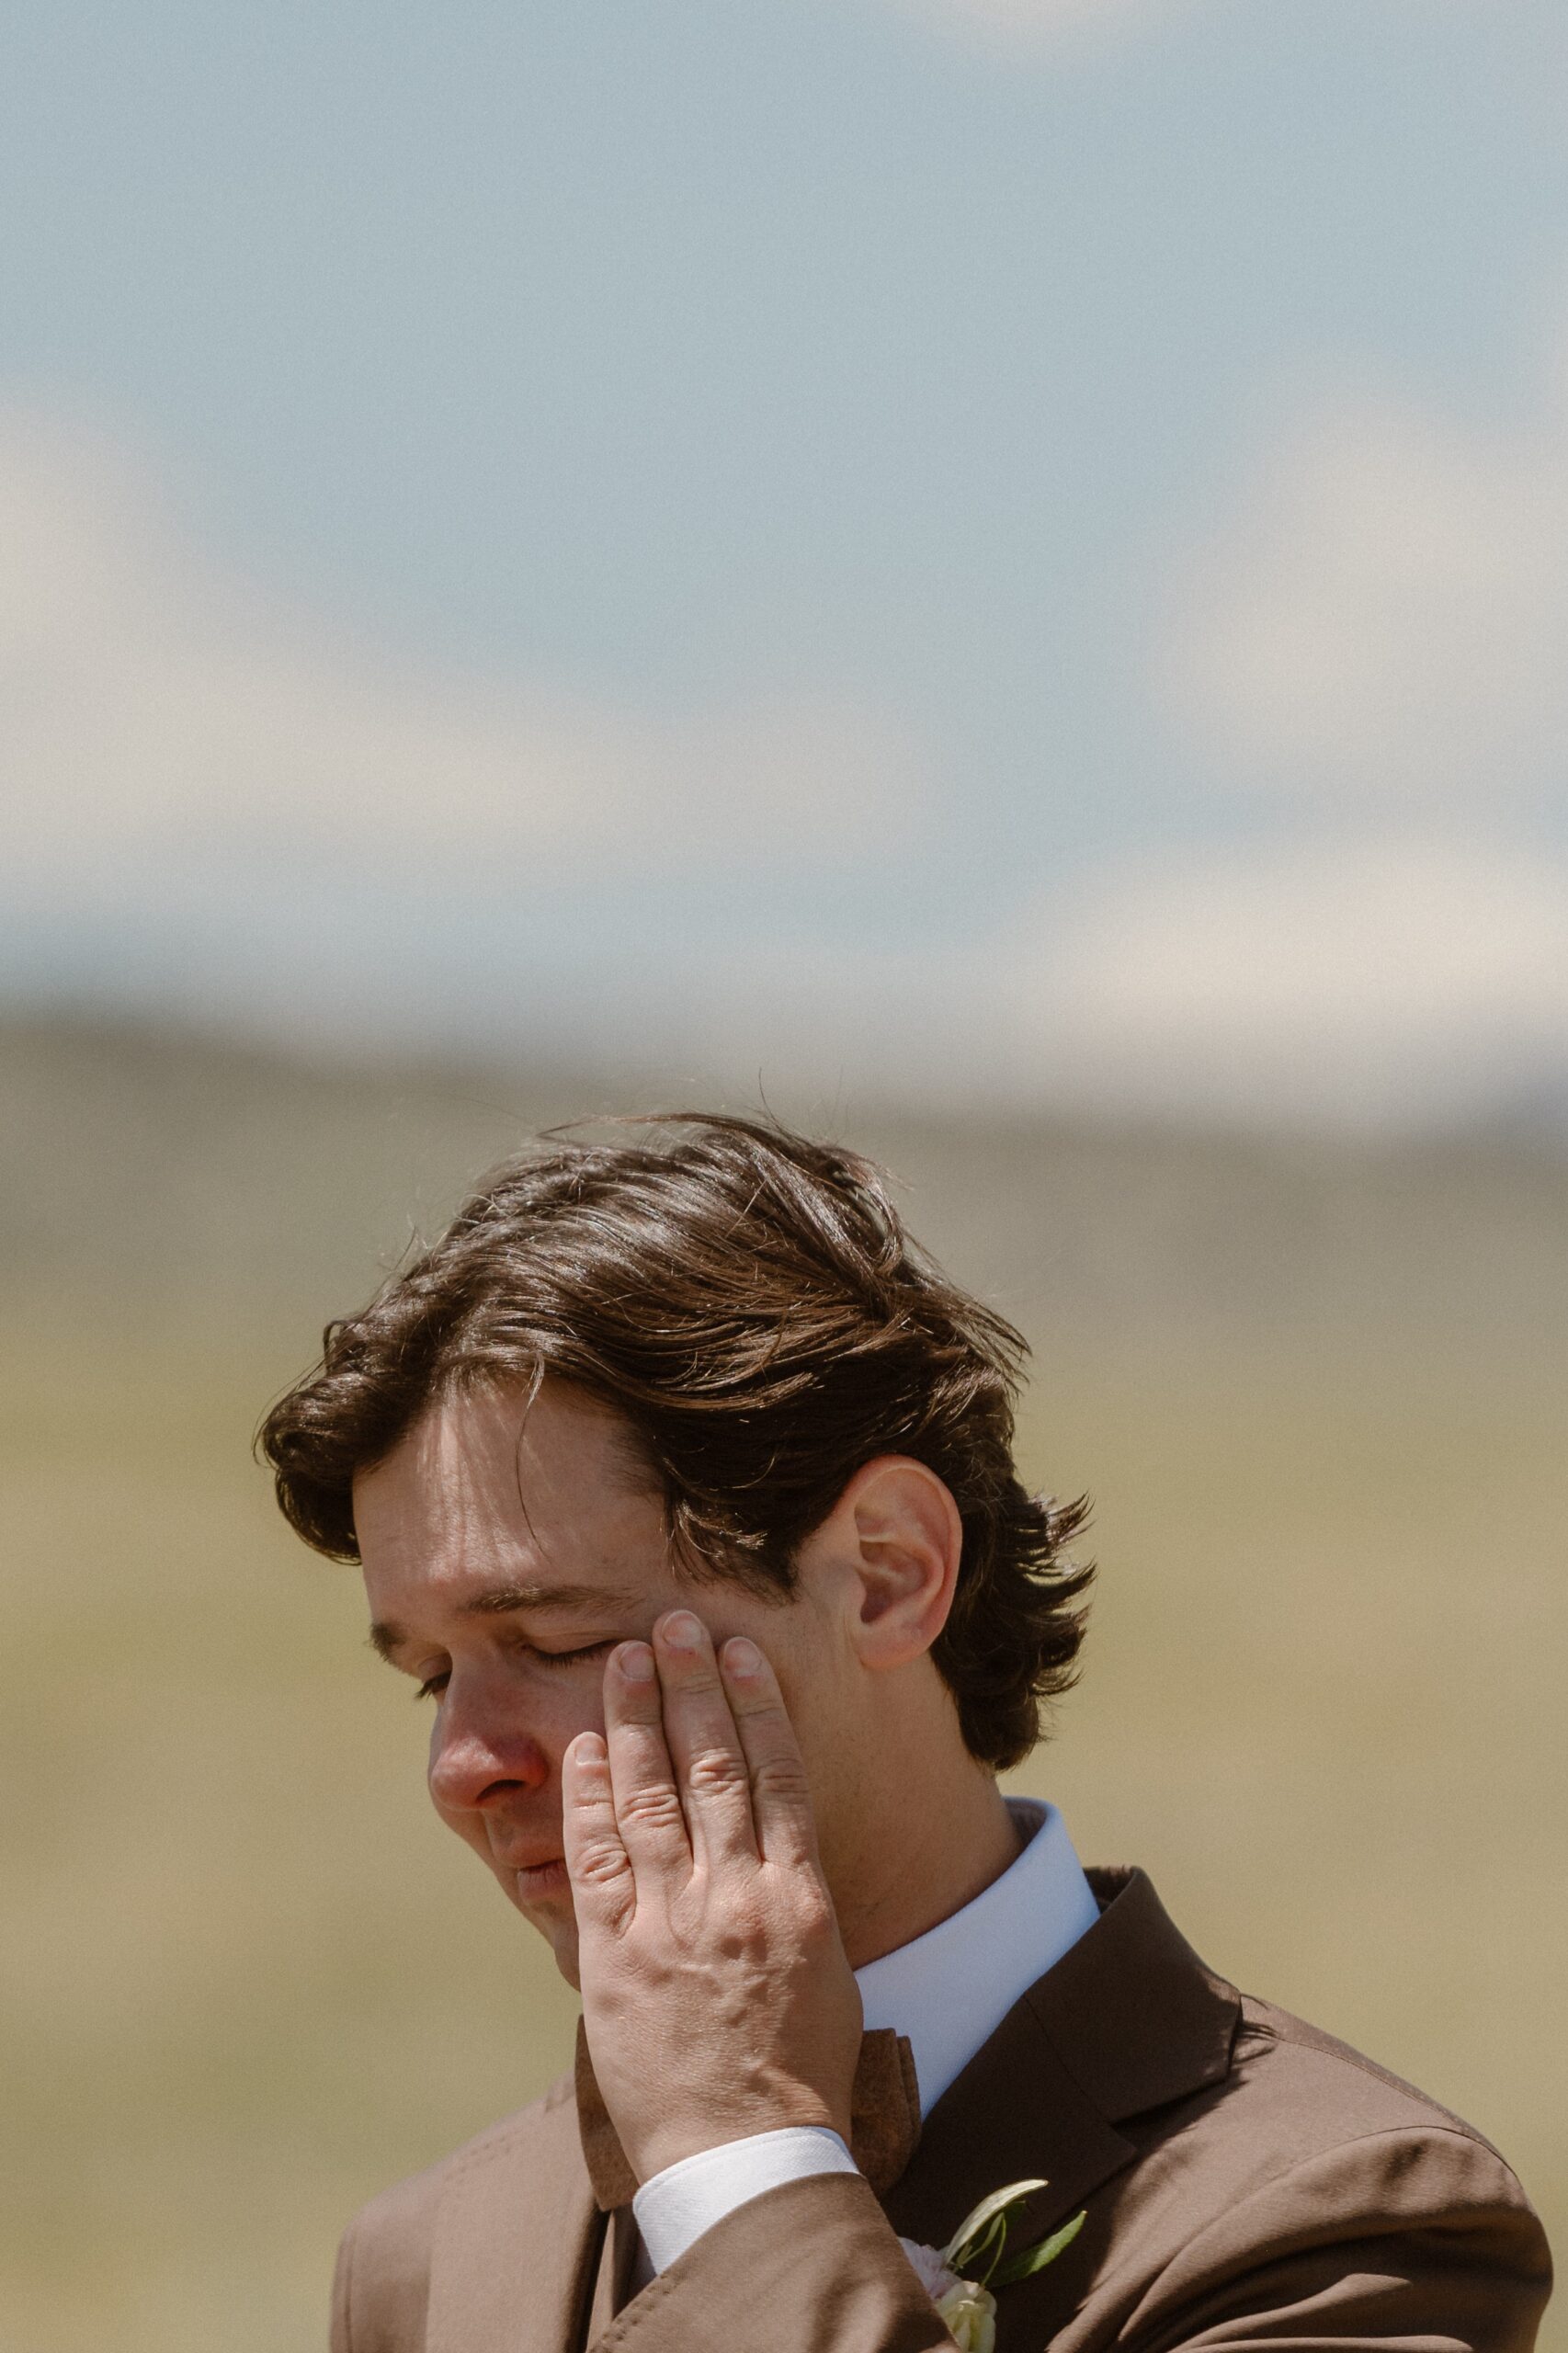 A groom wipes his tears away in a grassy field. Photo by Colorado wedding photographer, Ashley Joyce.